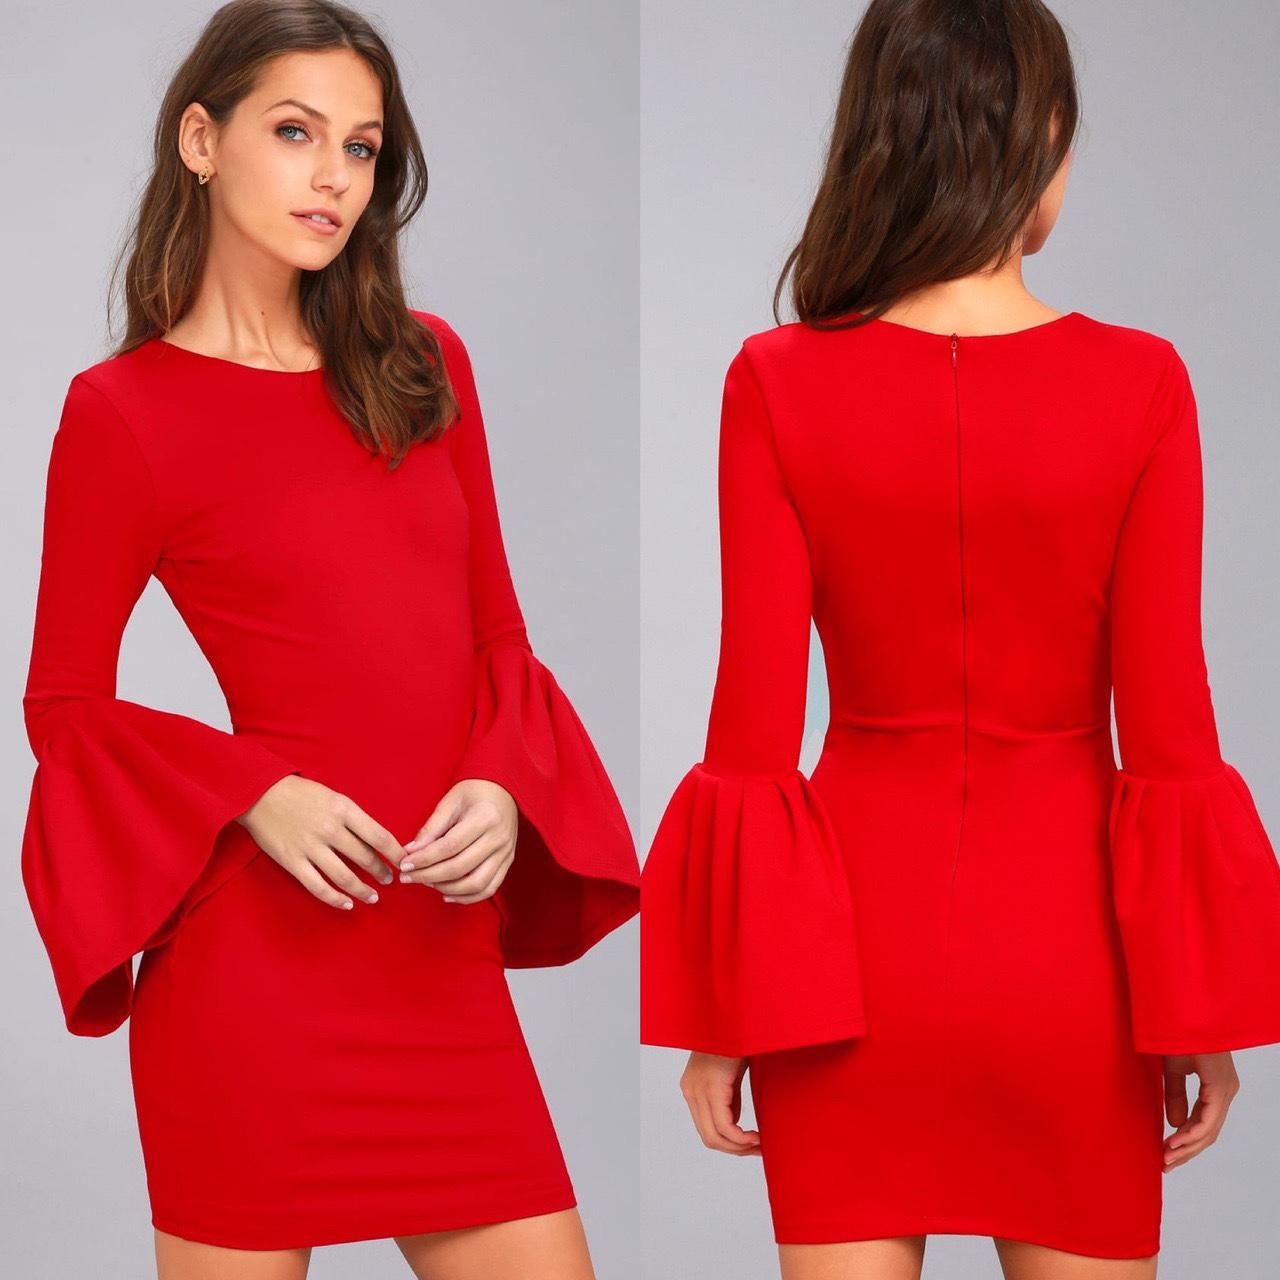 lulus red dress